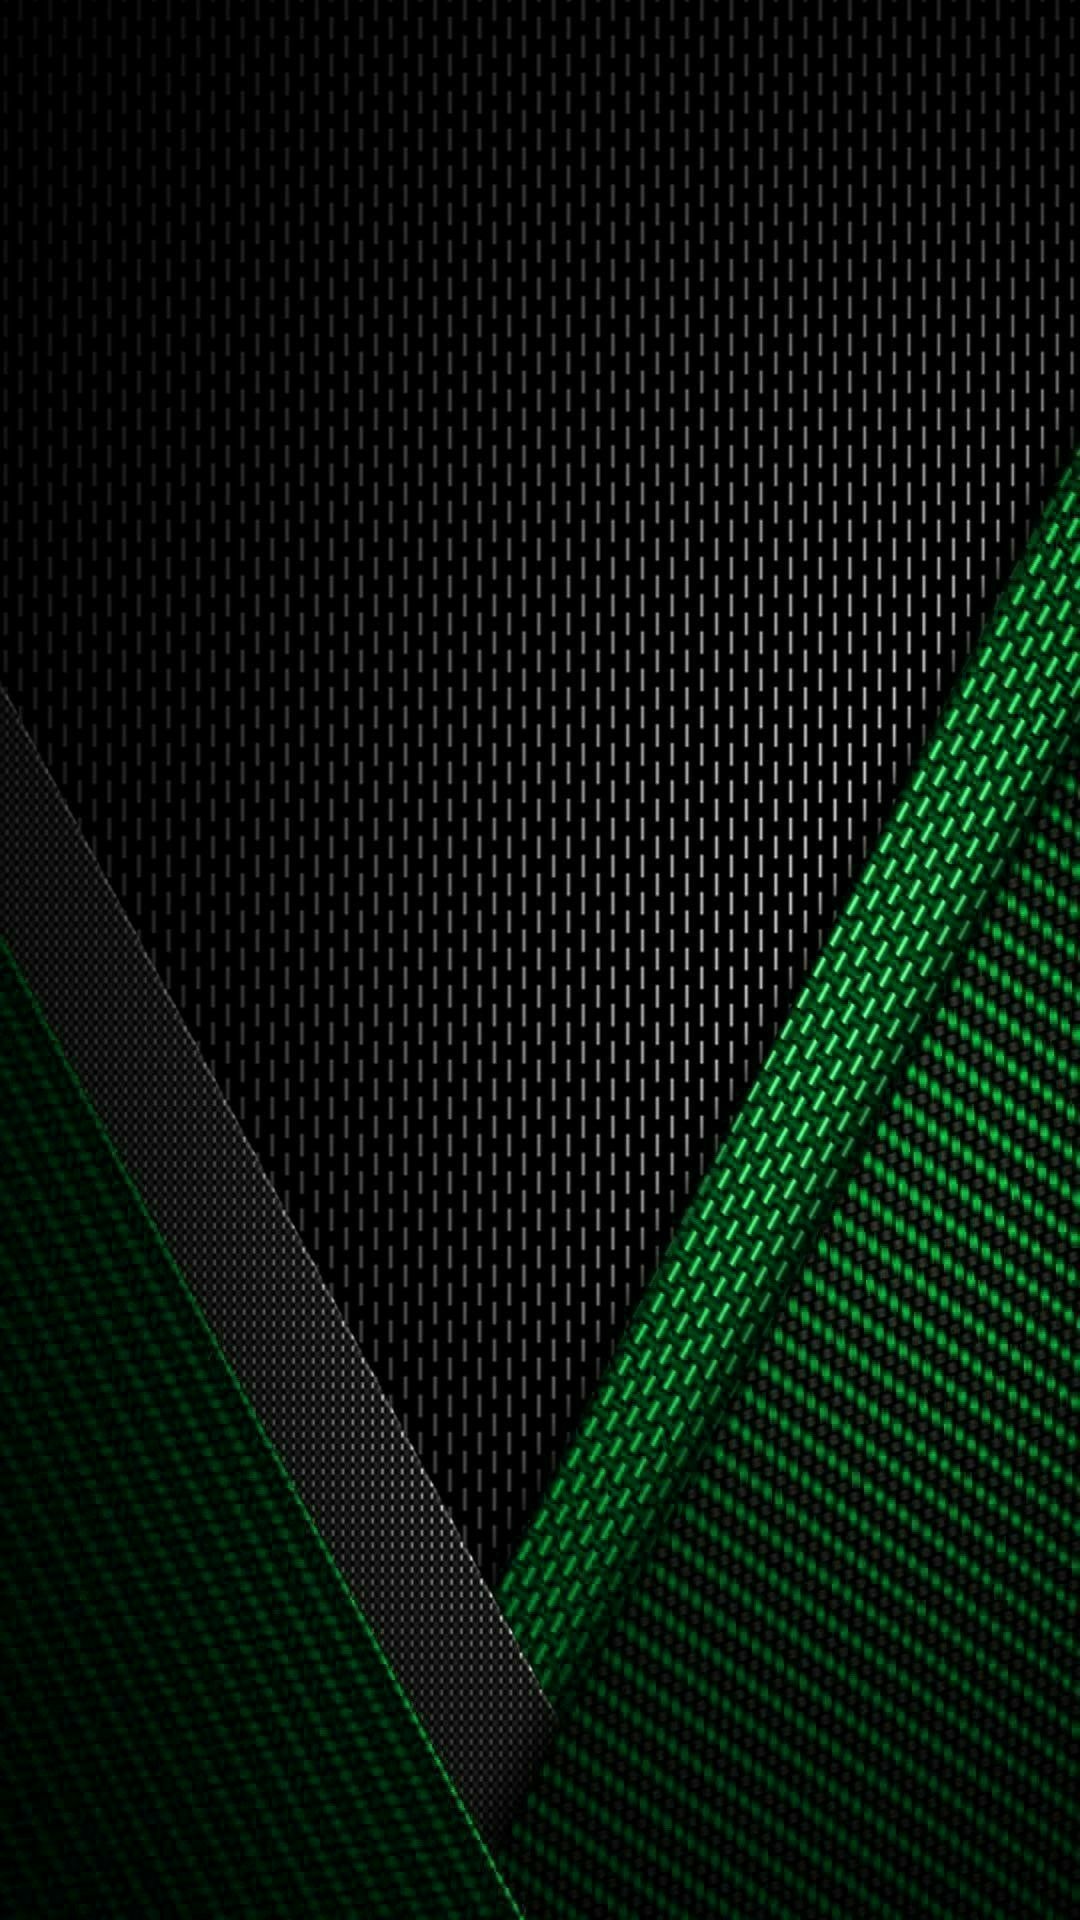 Green and Black Phone Wallpaper